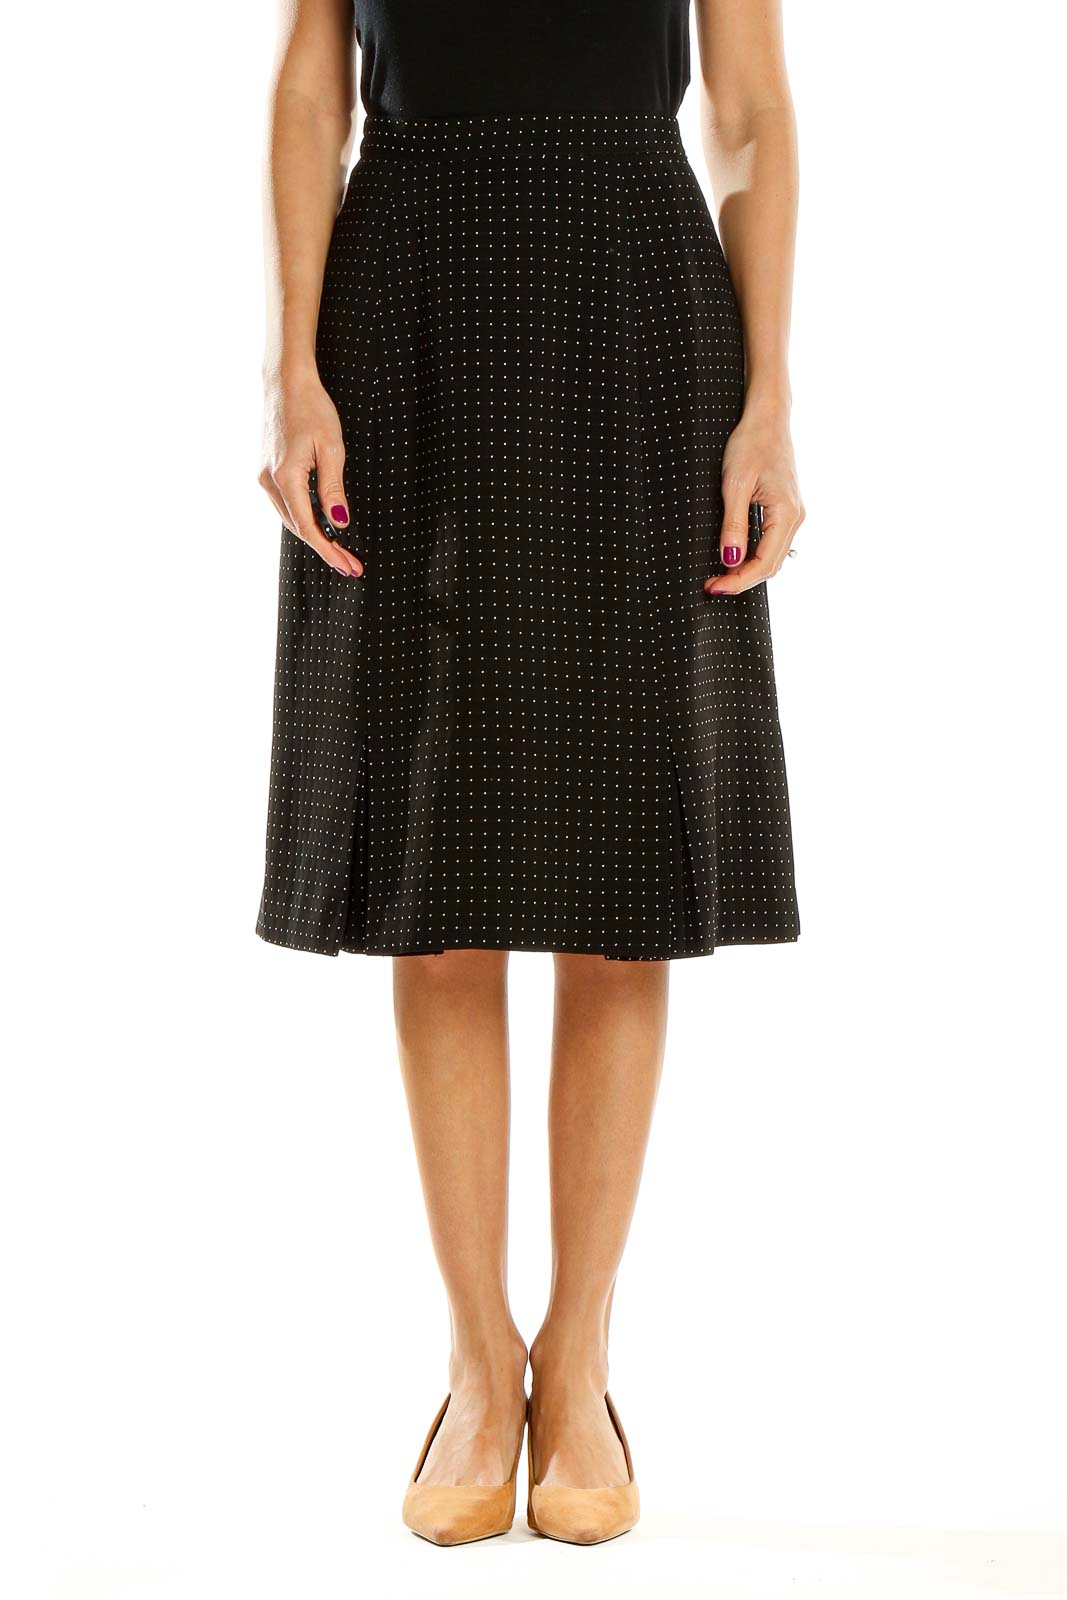 Black Polka Dot Classic A-Line Skirt Front